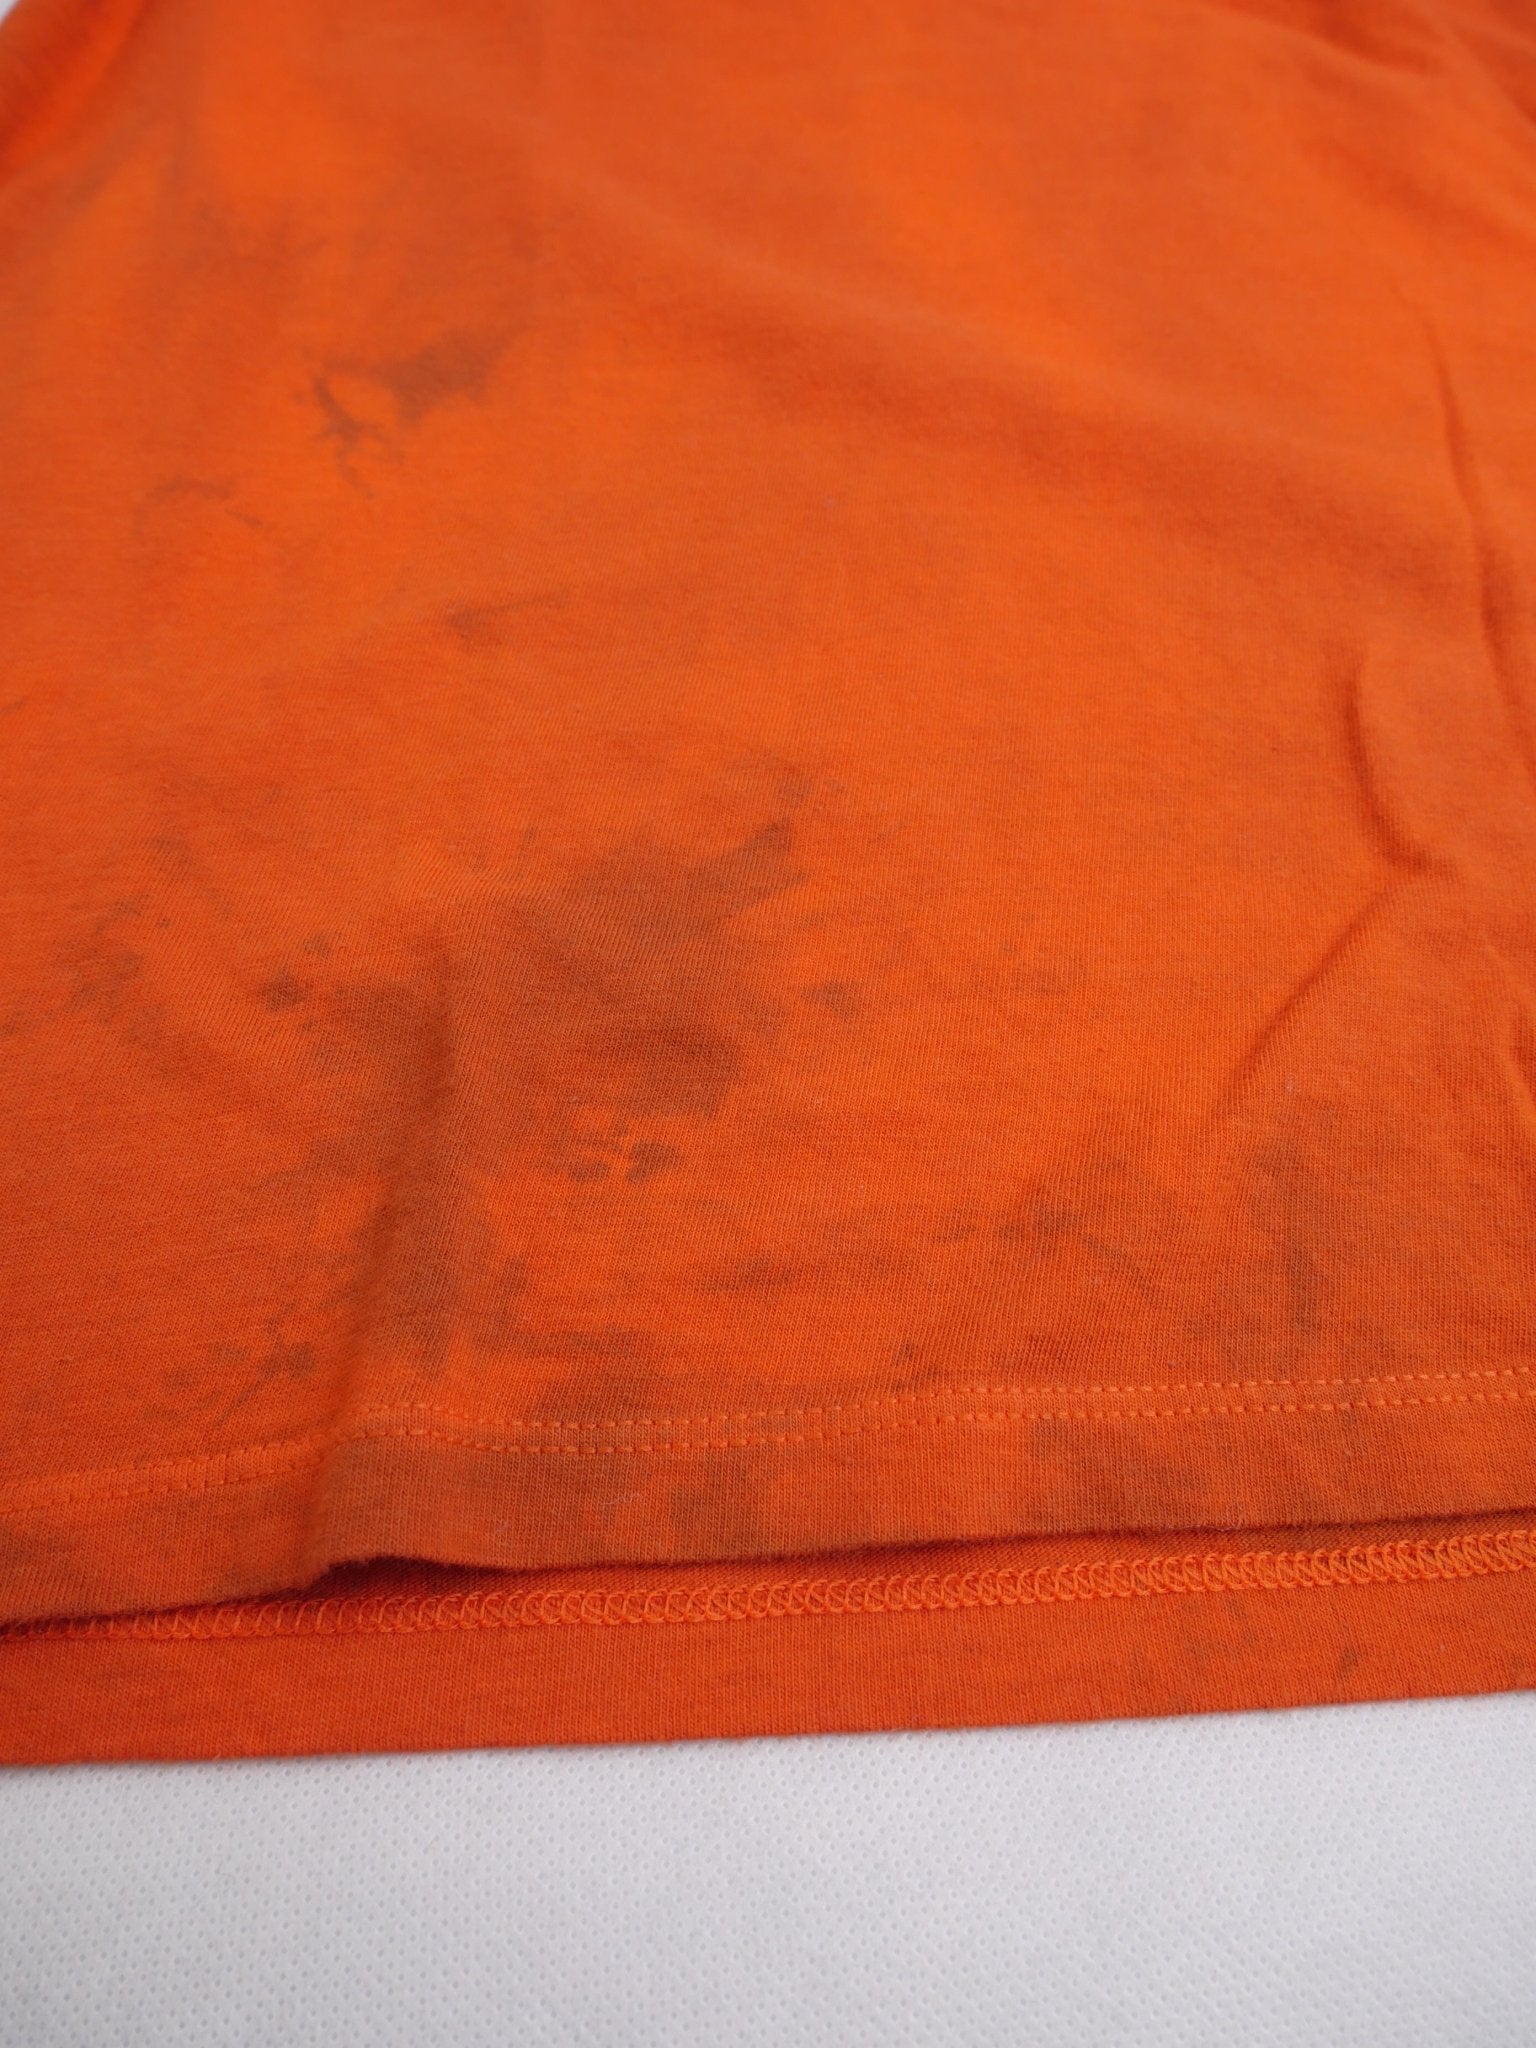 Nike printed Swoosh orange Shirt - Peeces